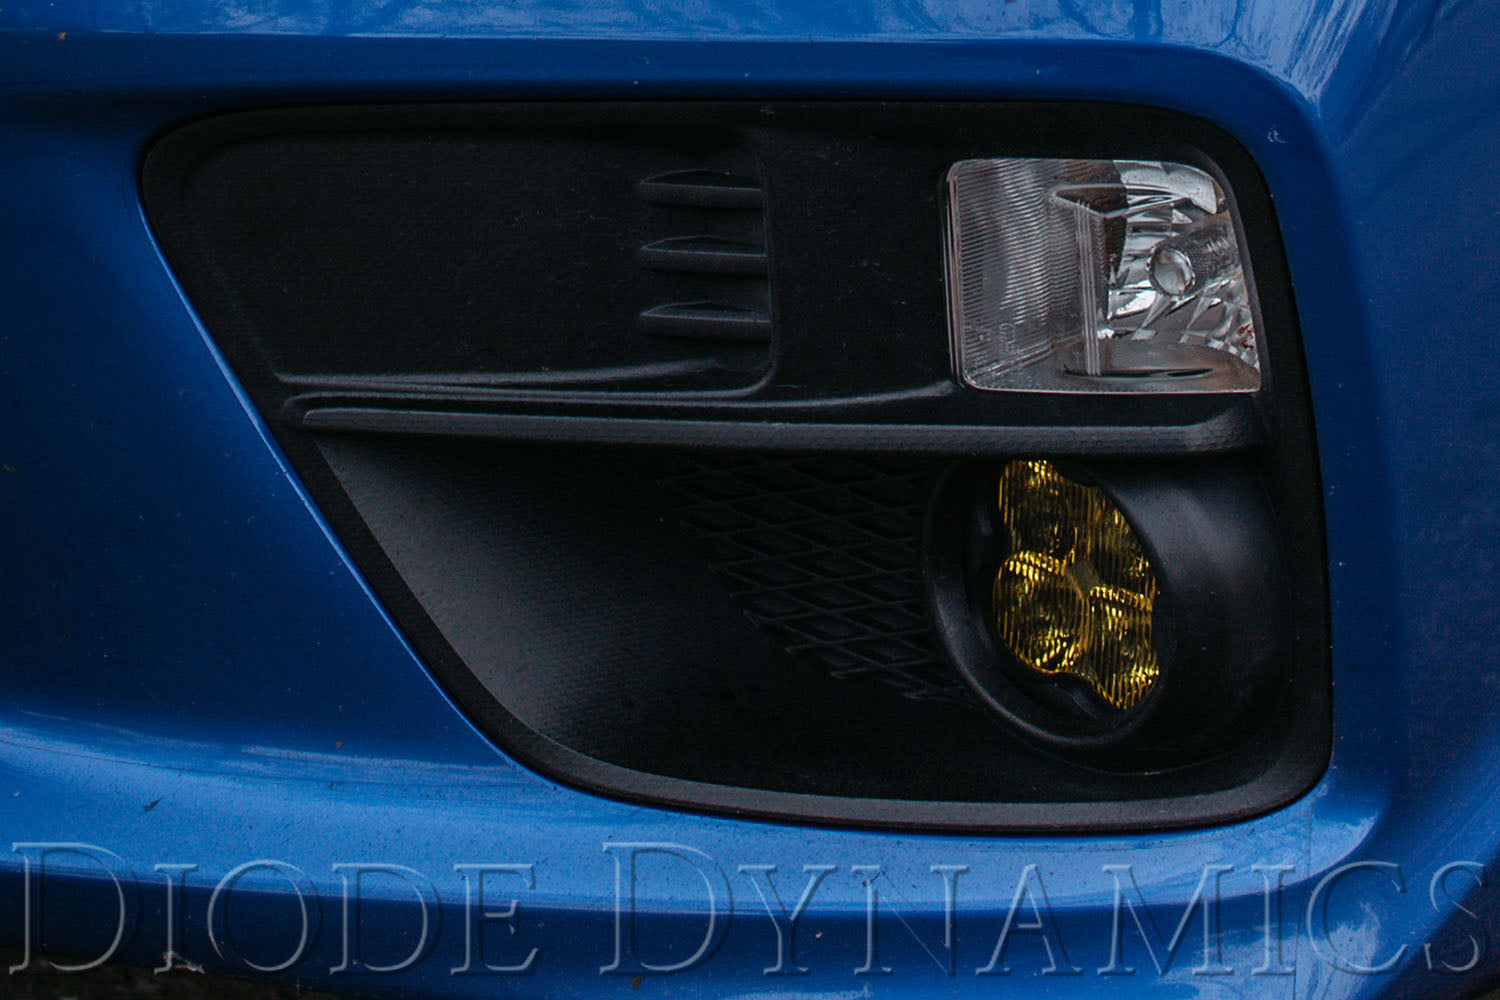 SS3 LED Fog Light Kit for 2013-2017 Acura ILX Yellow SAE Fog Pro Diode Dynamics